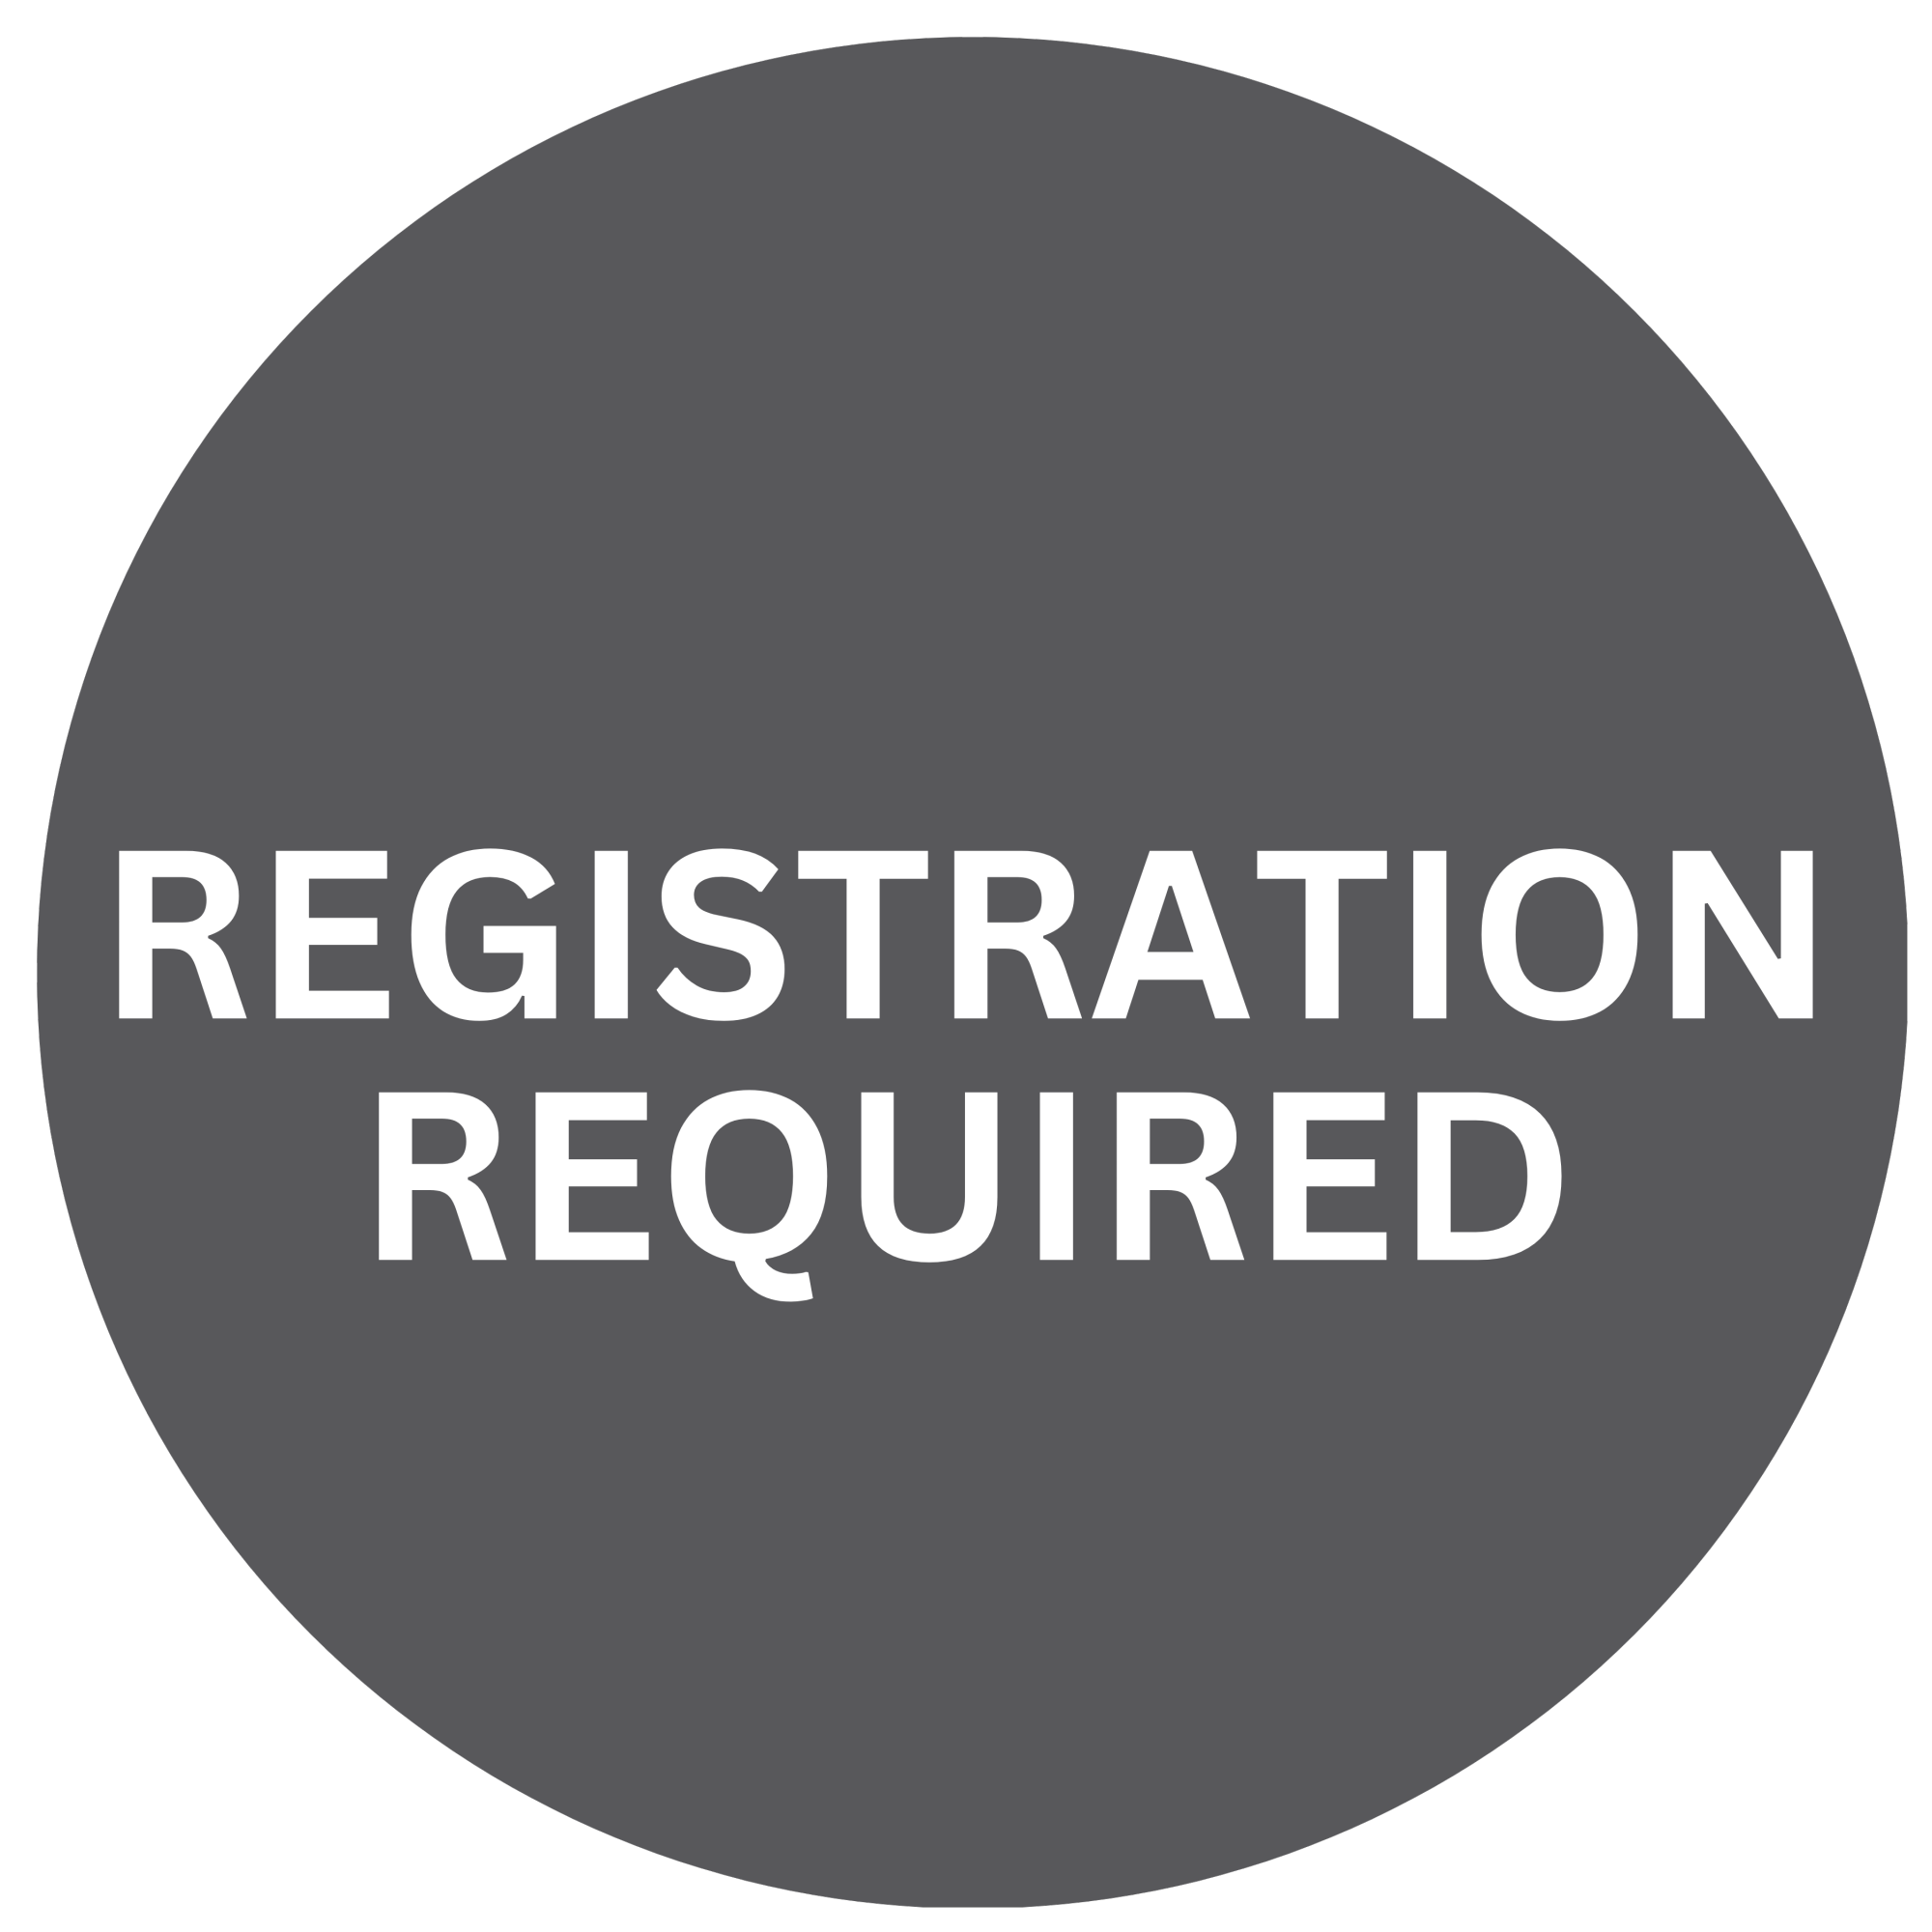 Registration required